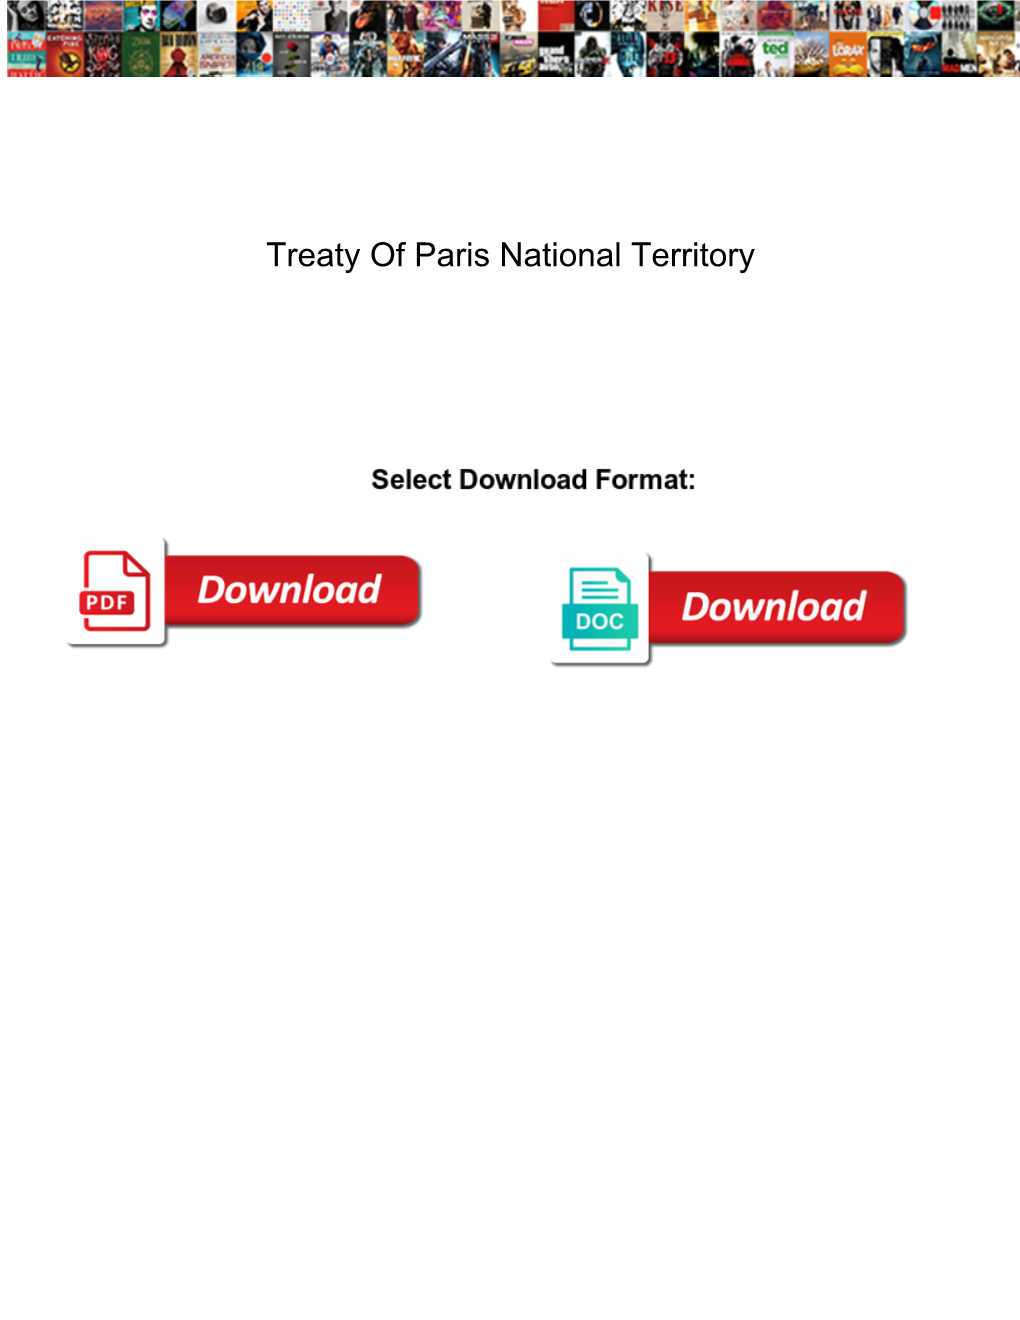 Treaty of Paris National Territory